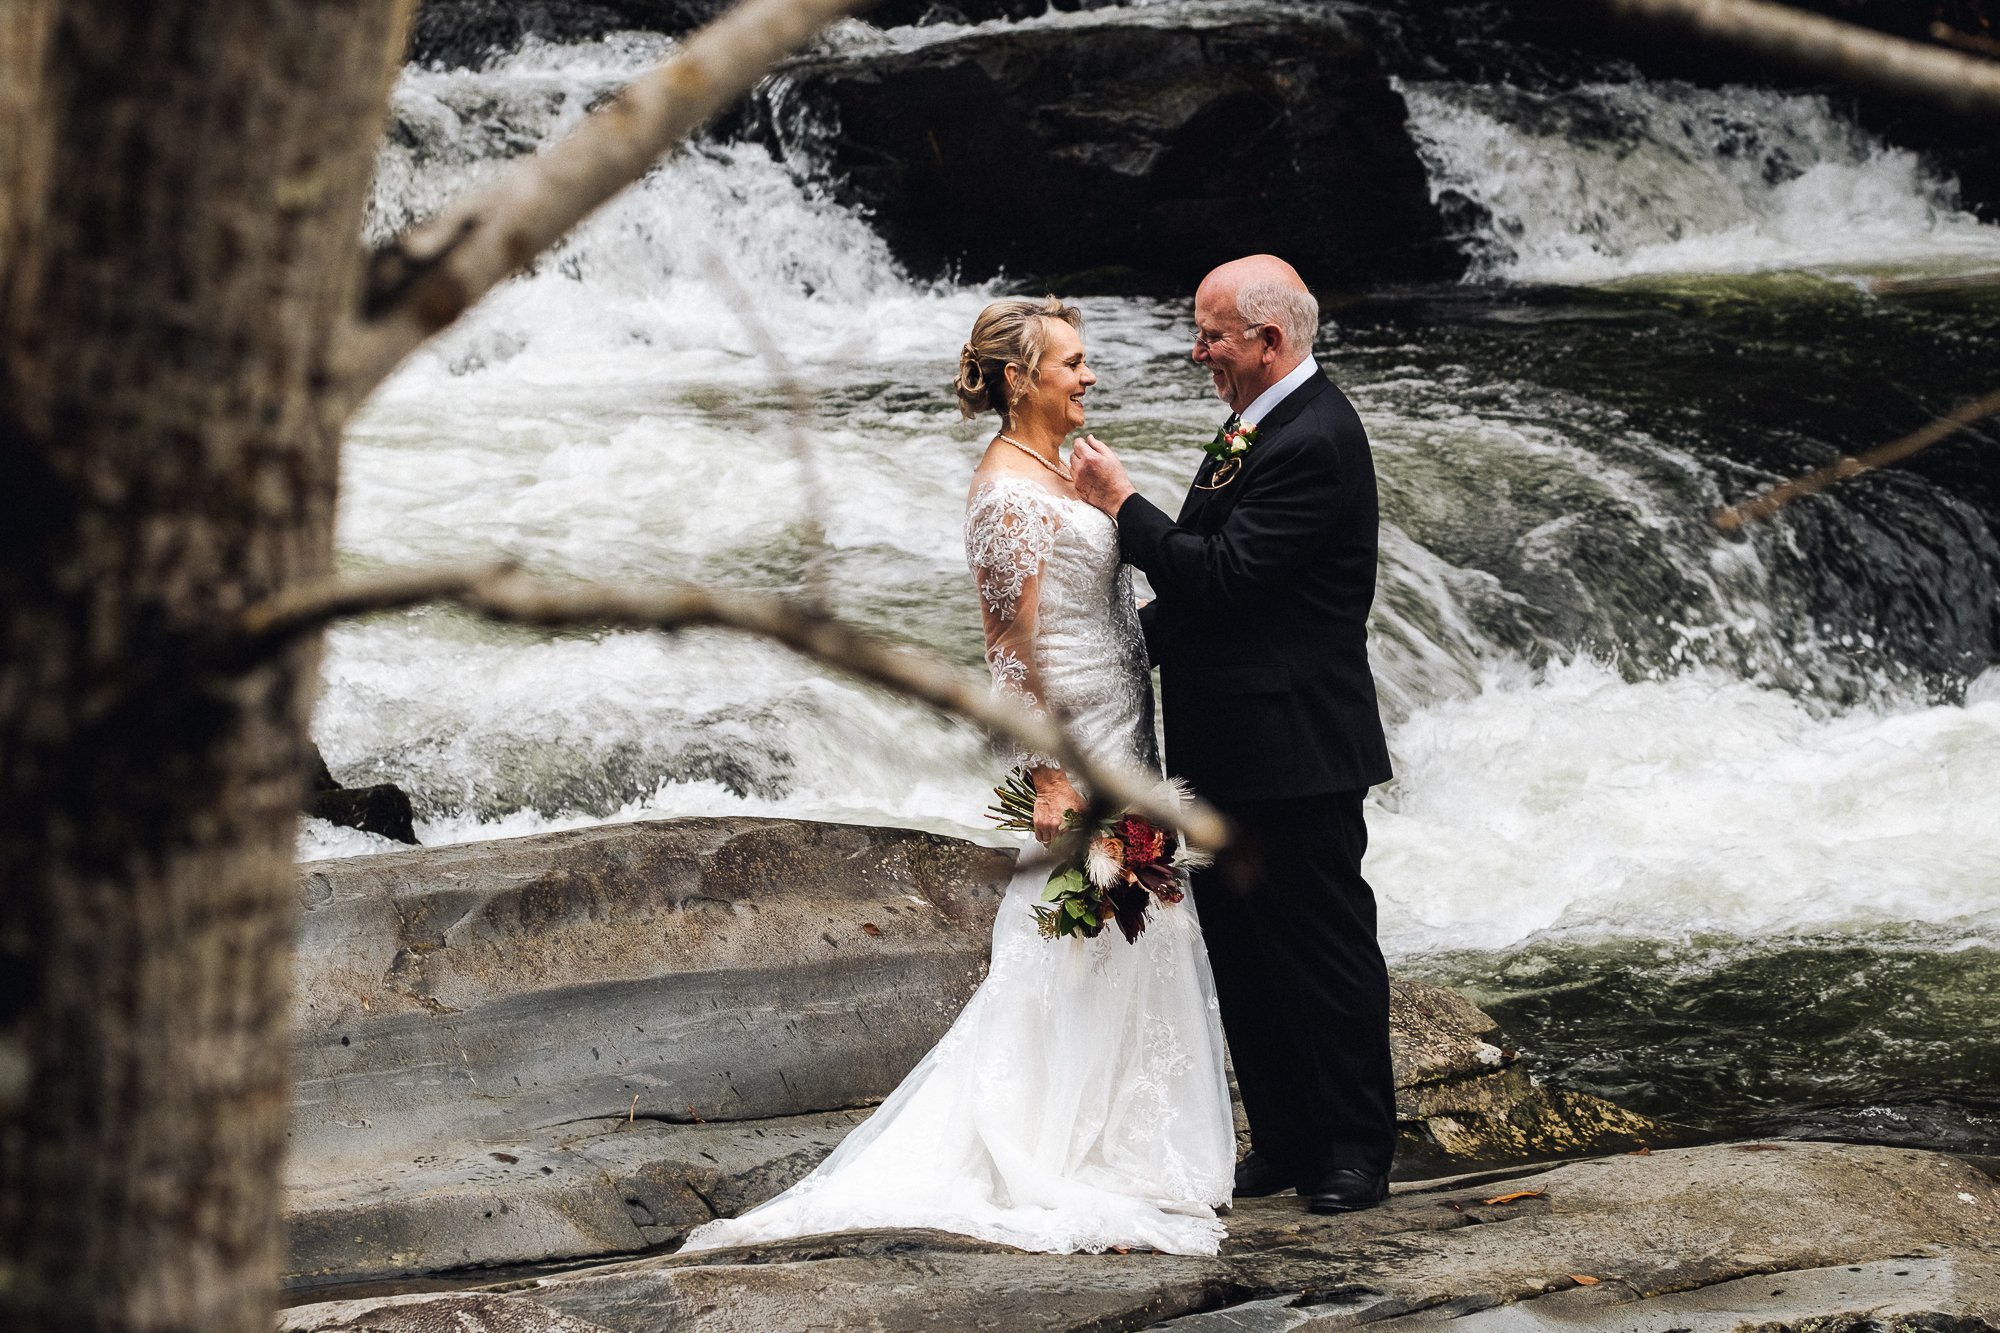 Candid nantahala waterfall wedding portrait